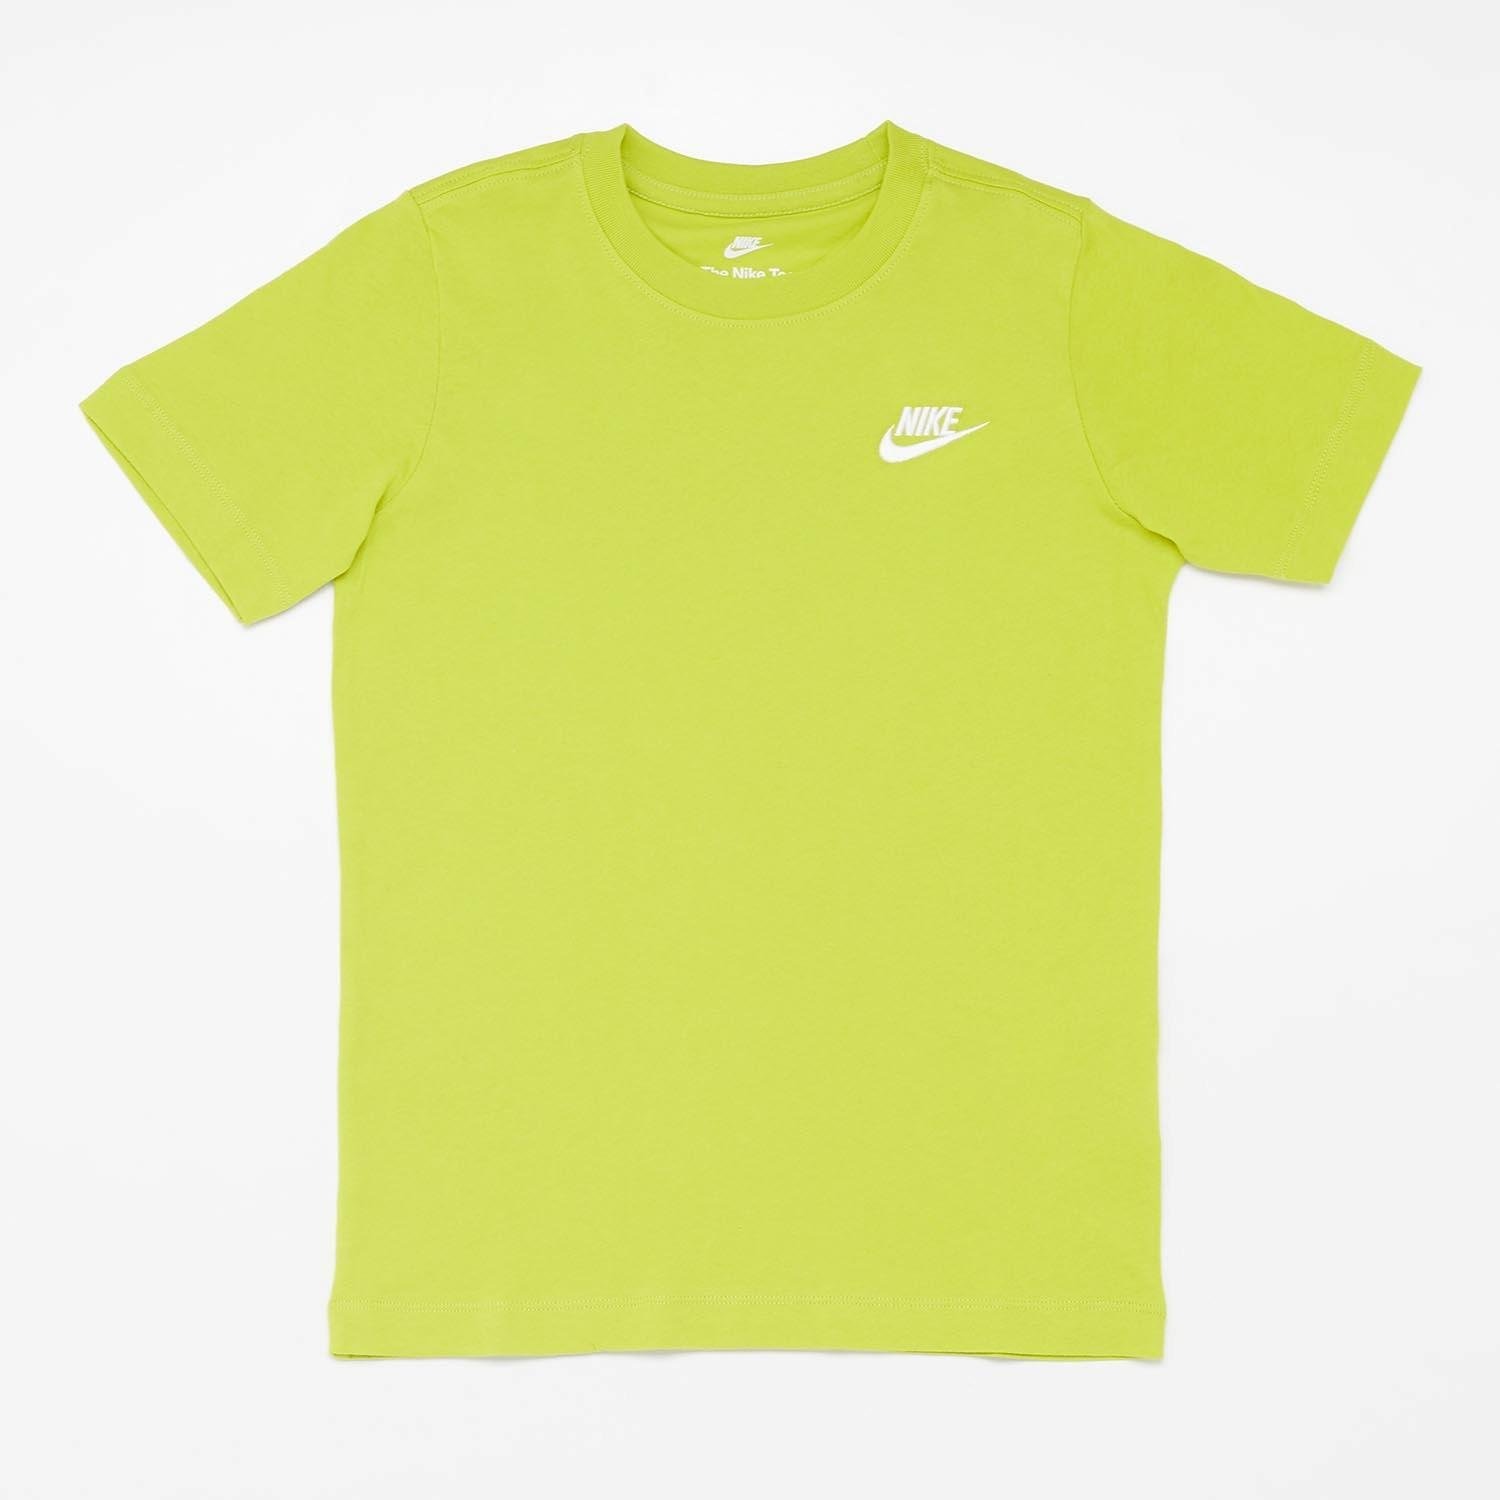 Nike Nike shirt groen kinderen kinderen